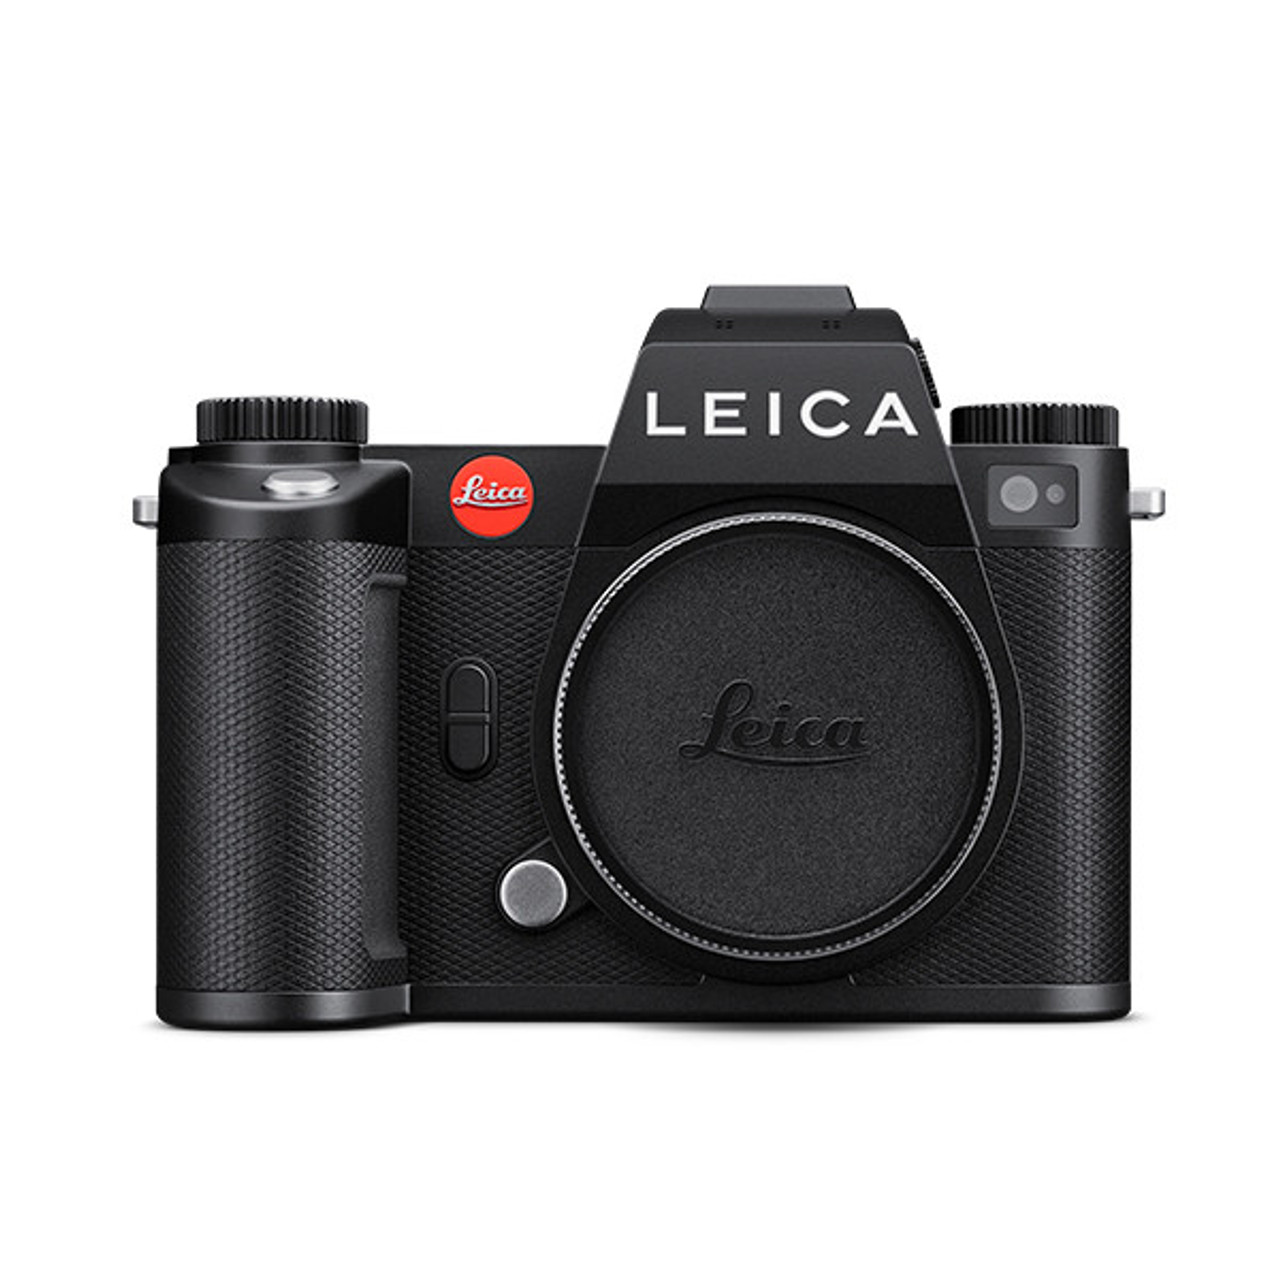 Reservation Deposit for Leica SL3 body